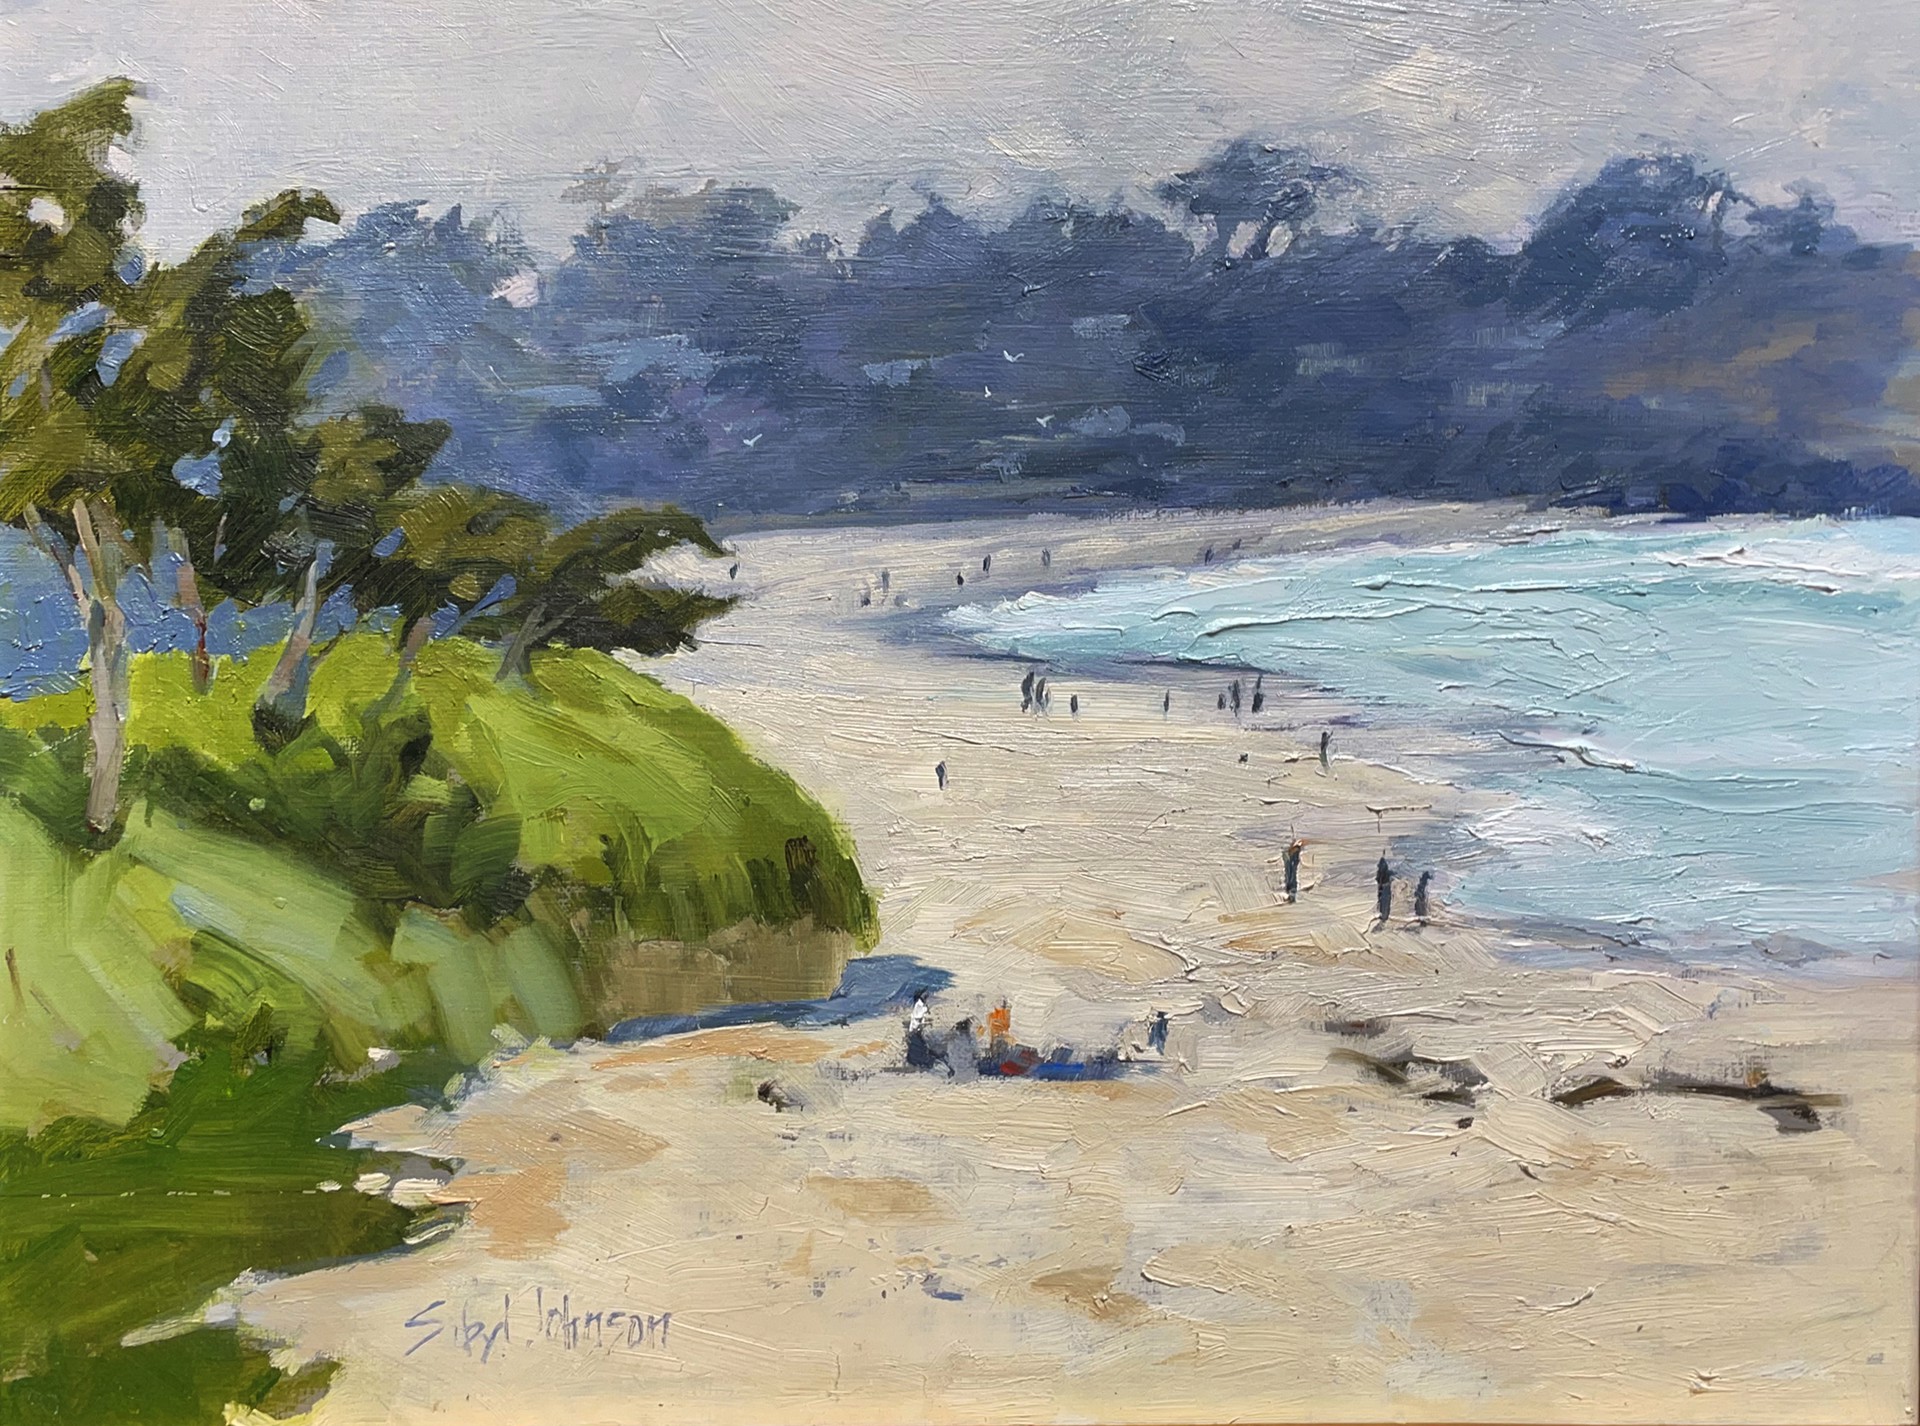 Beach Picnic by Sibyl Johnson